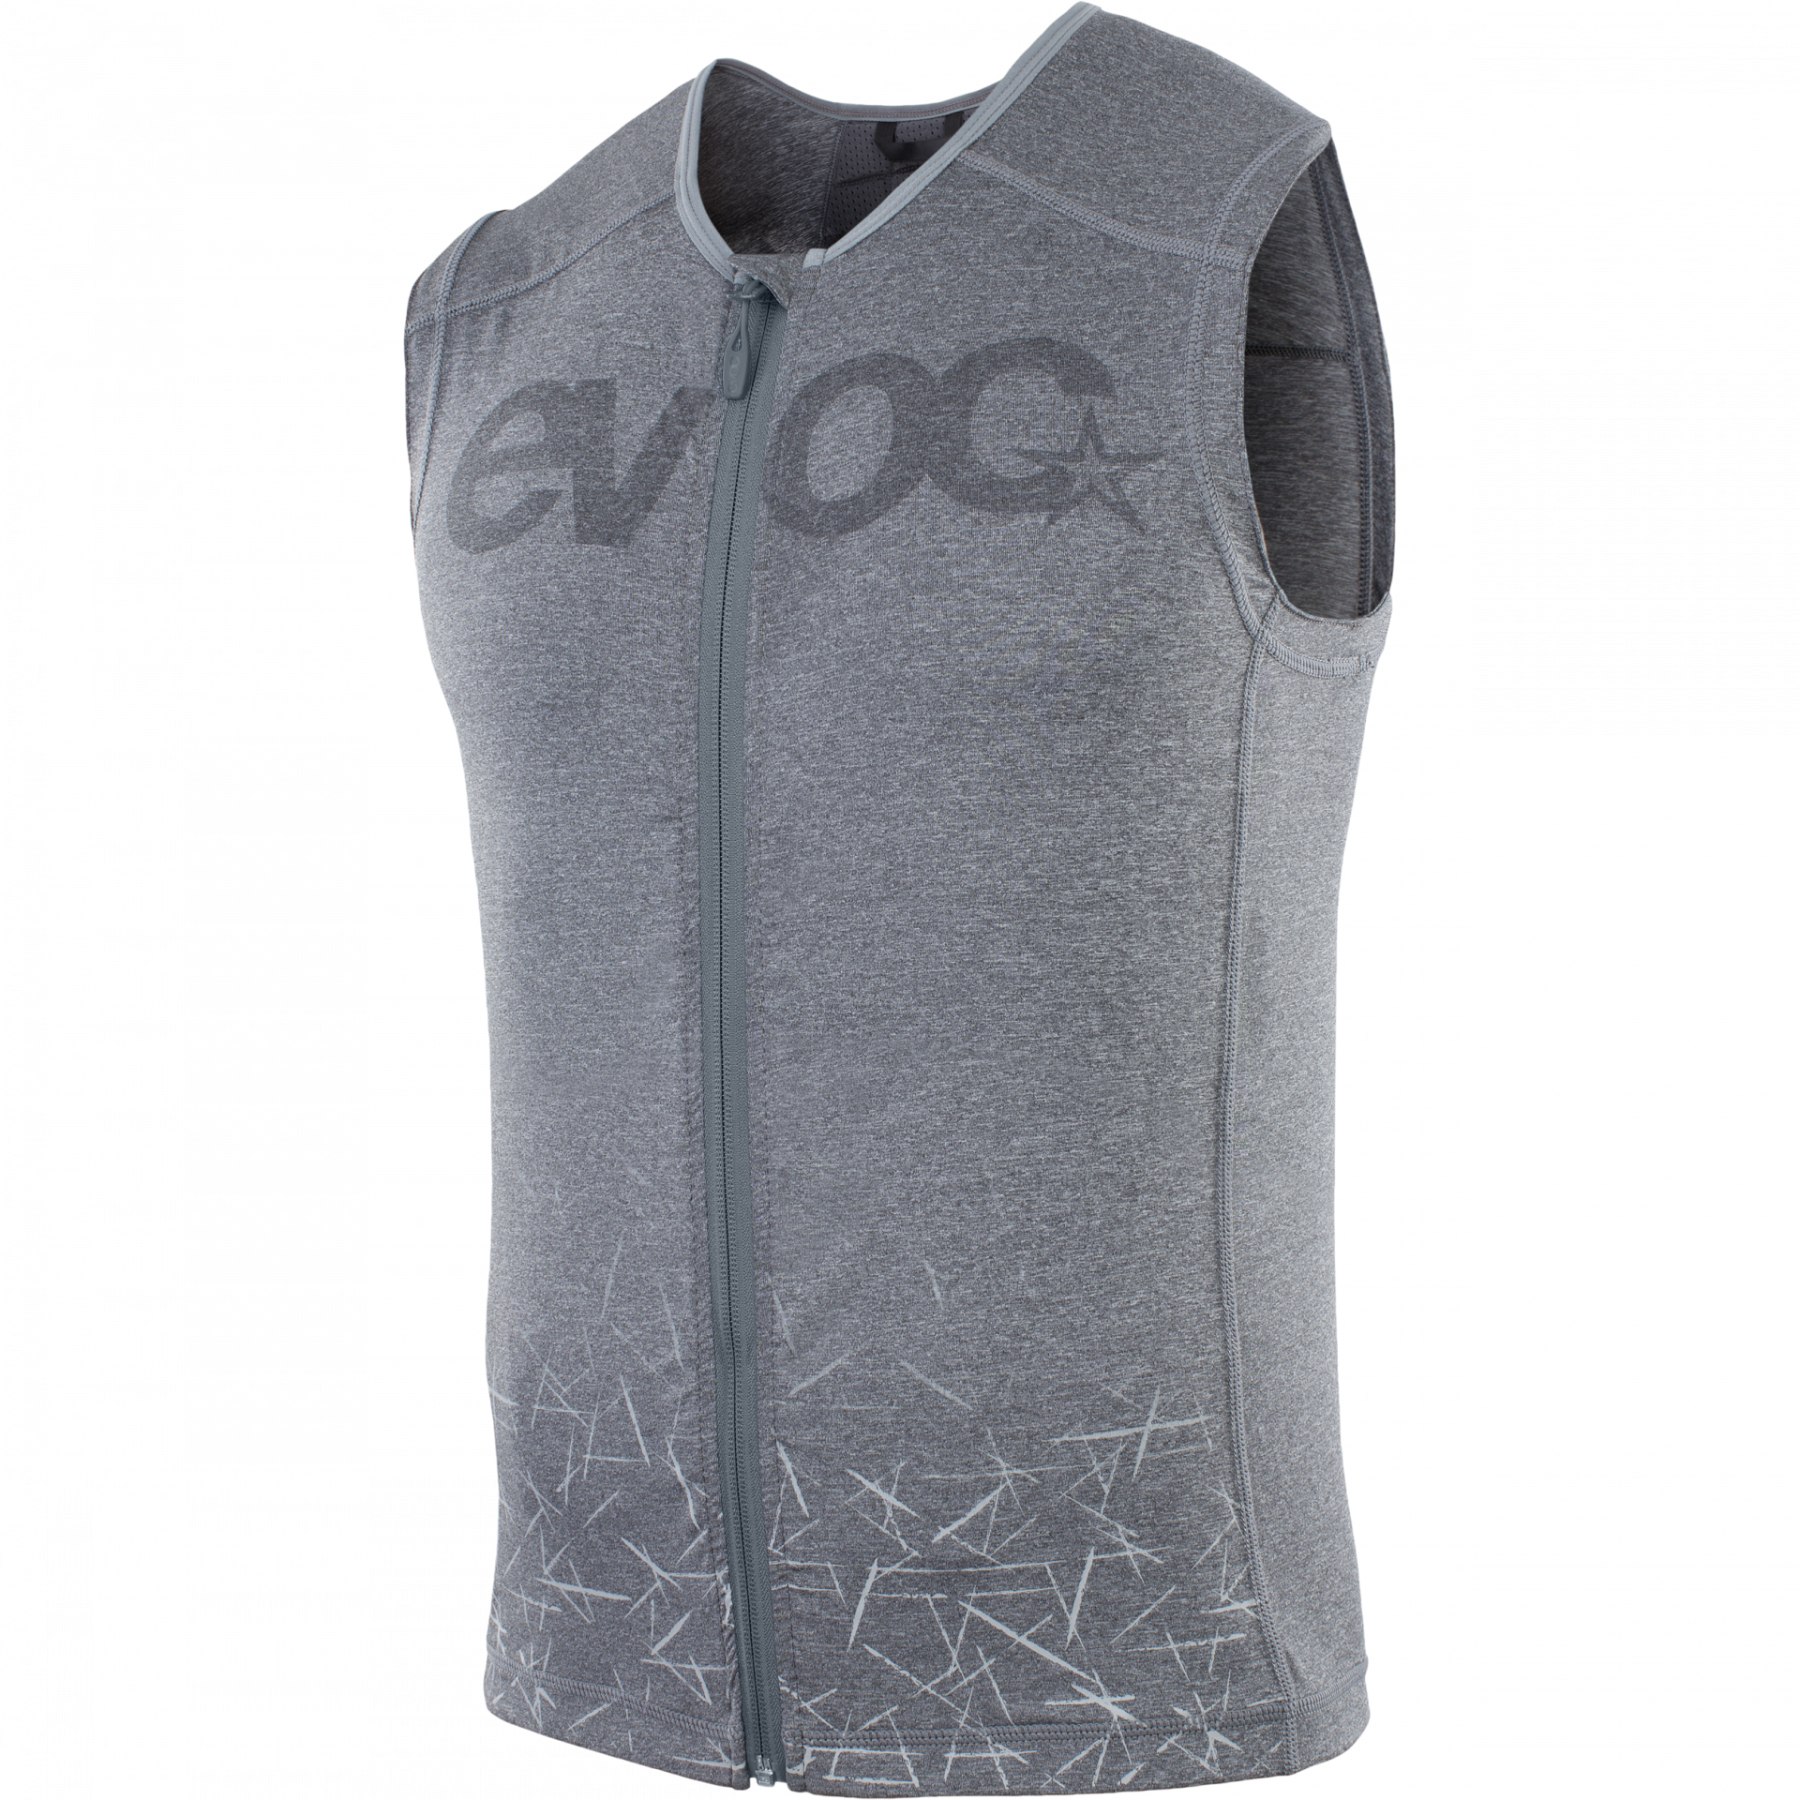 Productfoto van EVOC Protector Vest Men - Carbon Grey